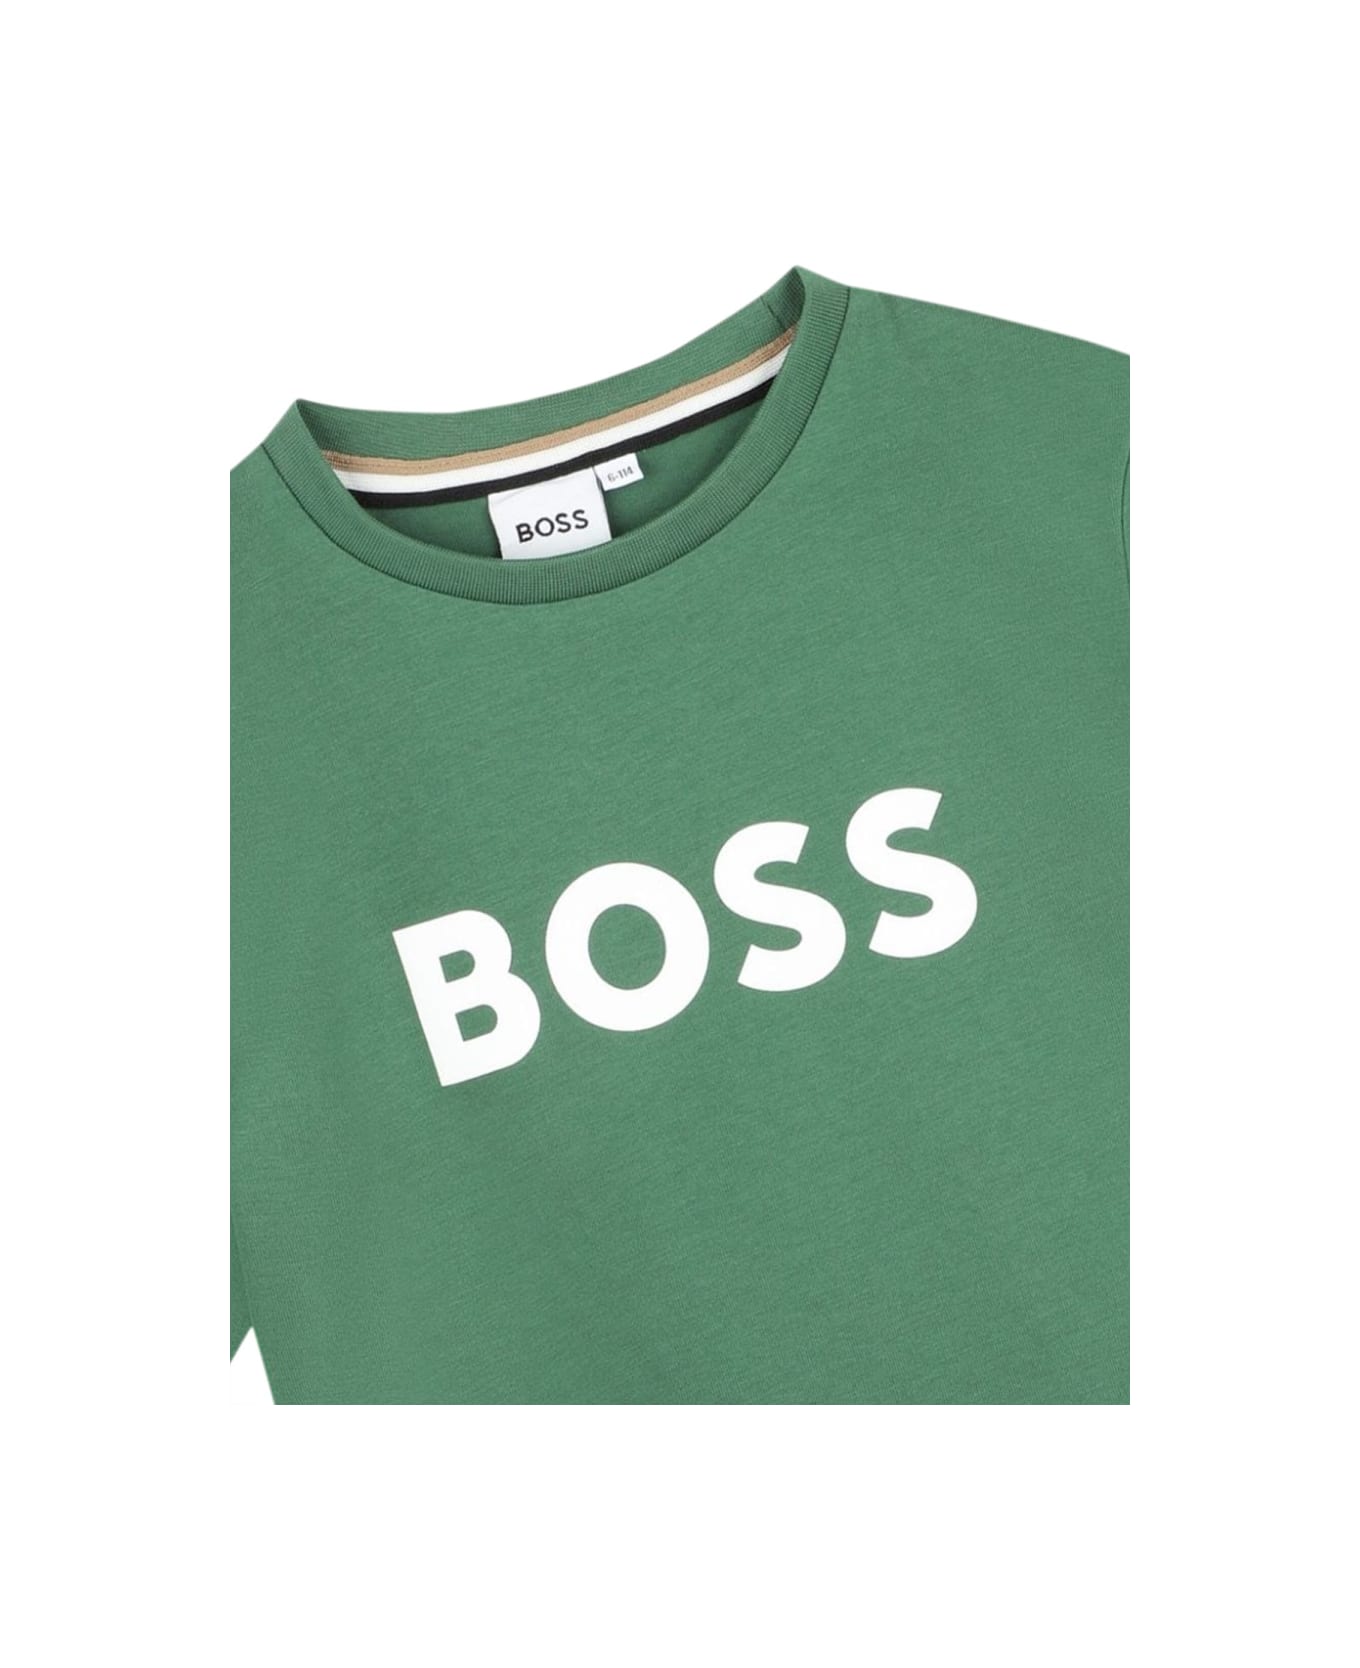 Hugo Boss Tee Shirt - BROWN